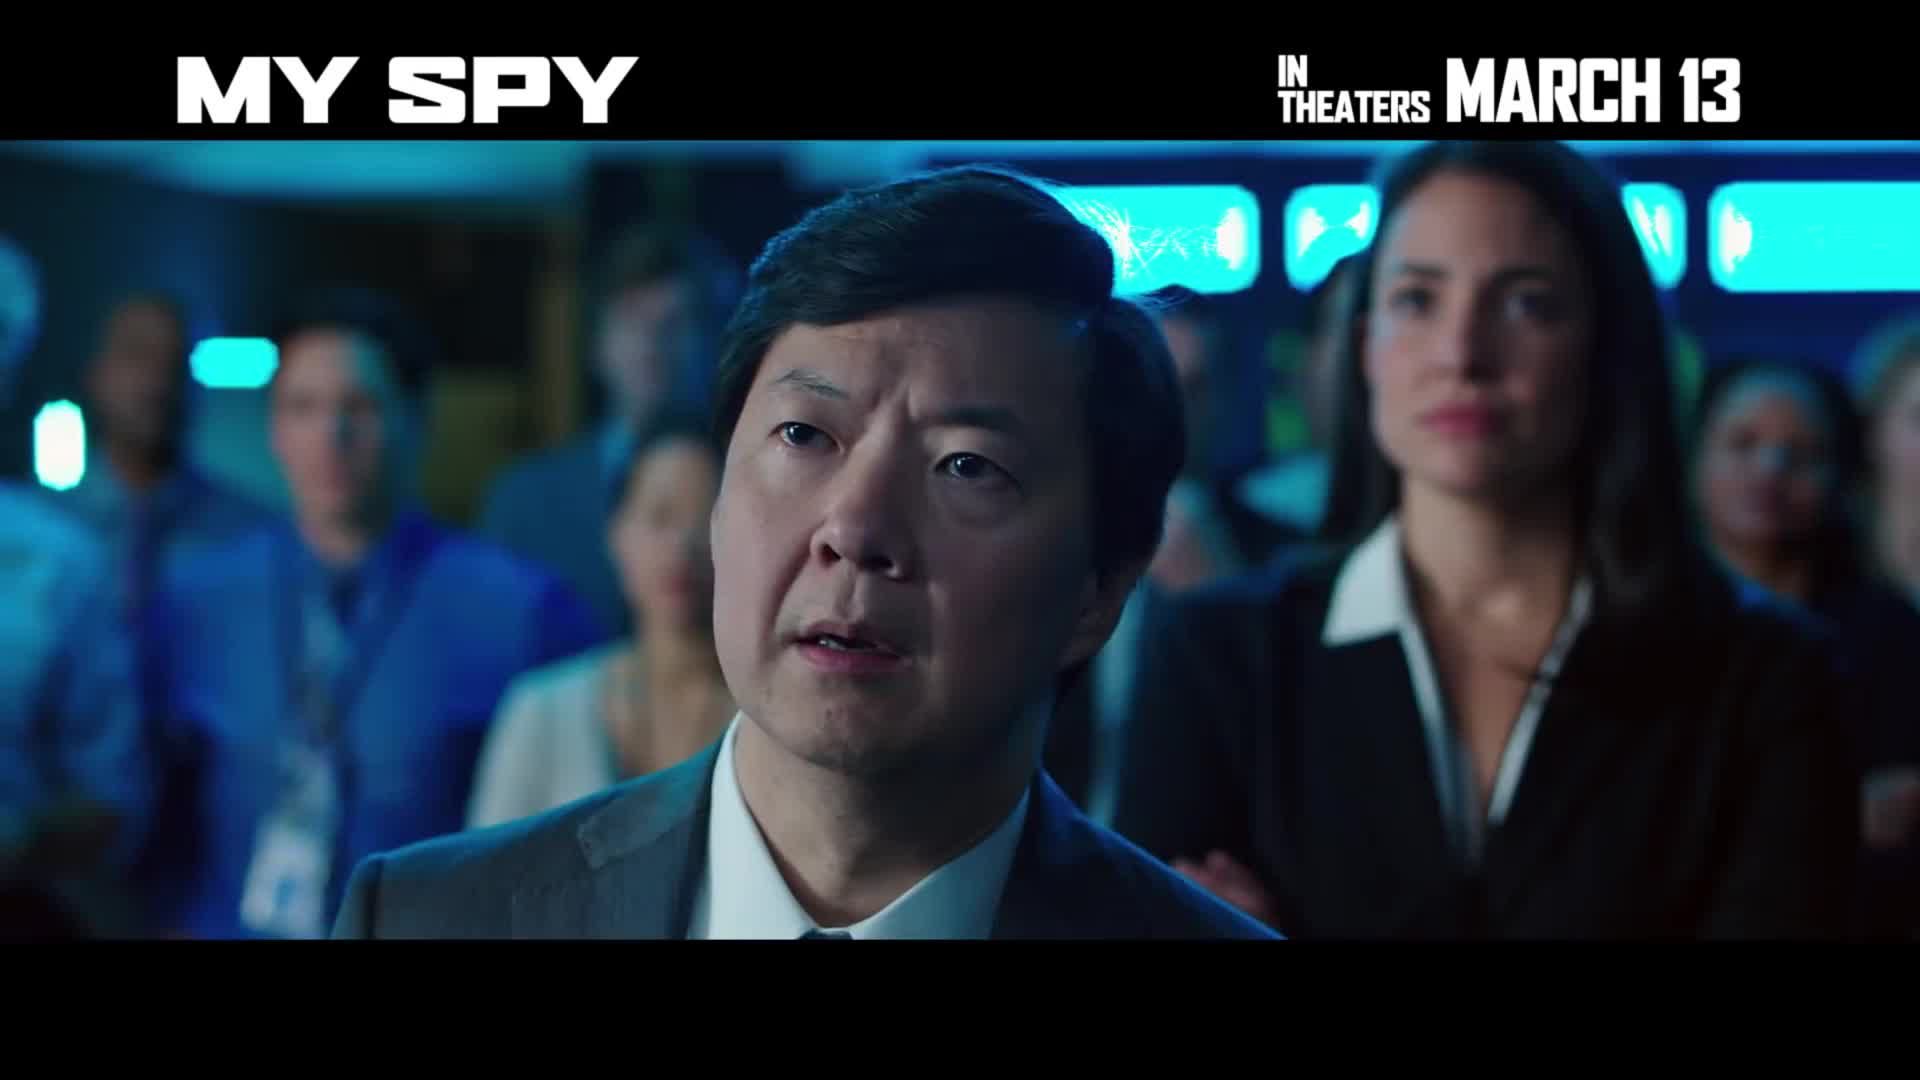 My Spy: This Is Jj (TV Spot)